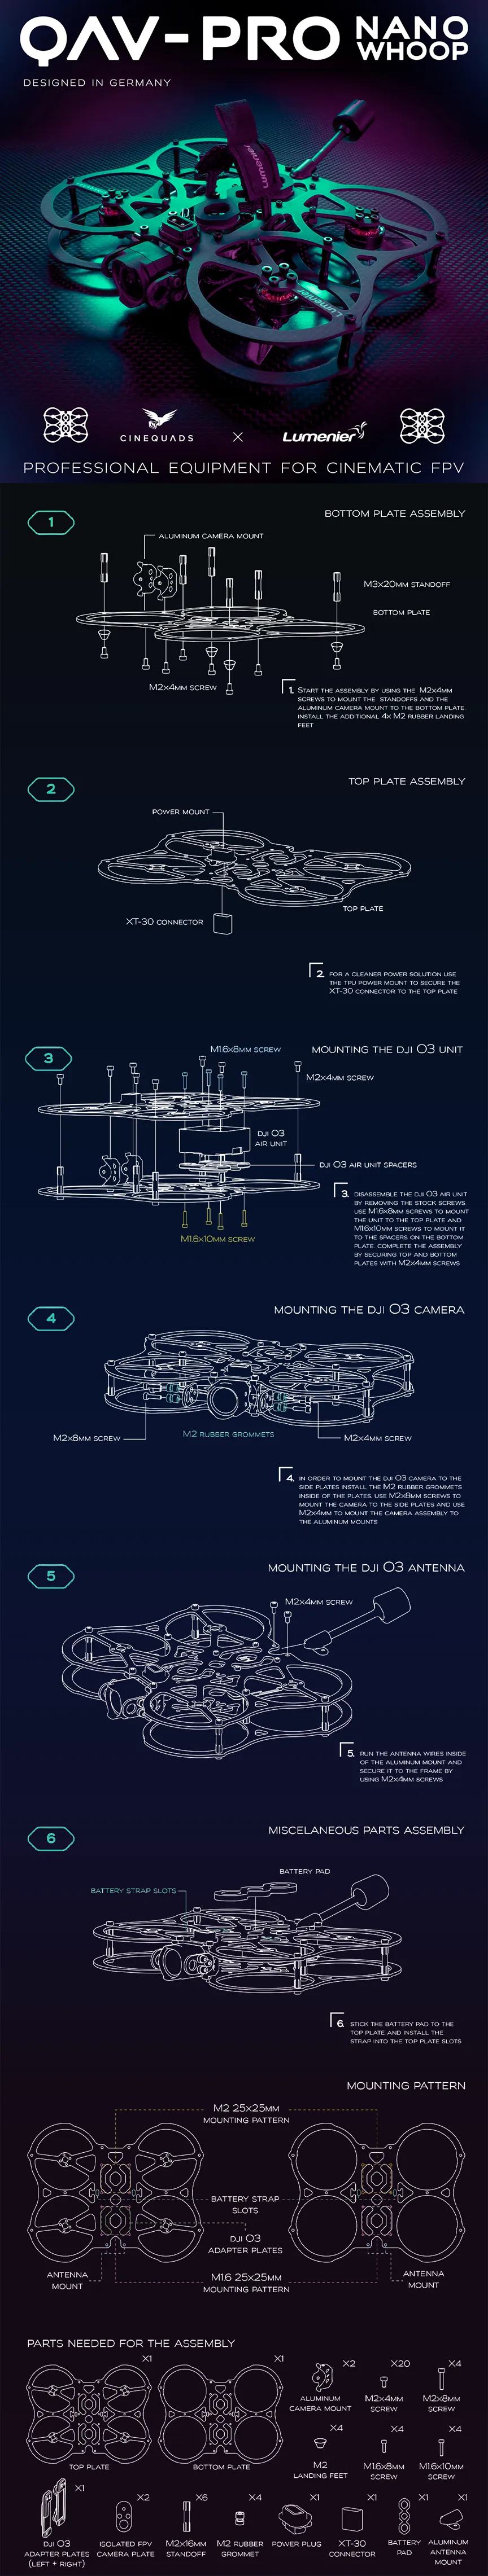 Lumenier-QAV-PRO-Nano-Whoop-2-Cinequads-Edition-Infographic.webp